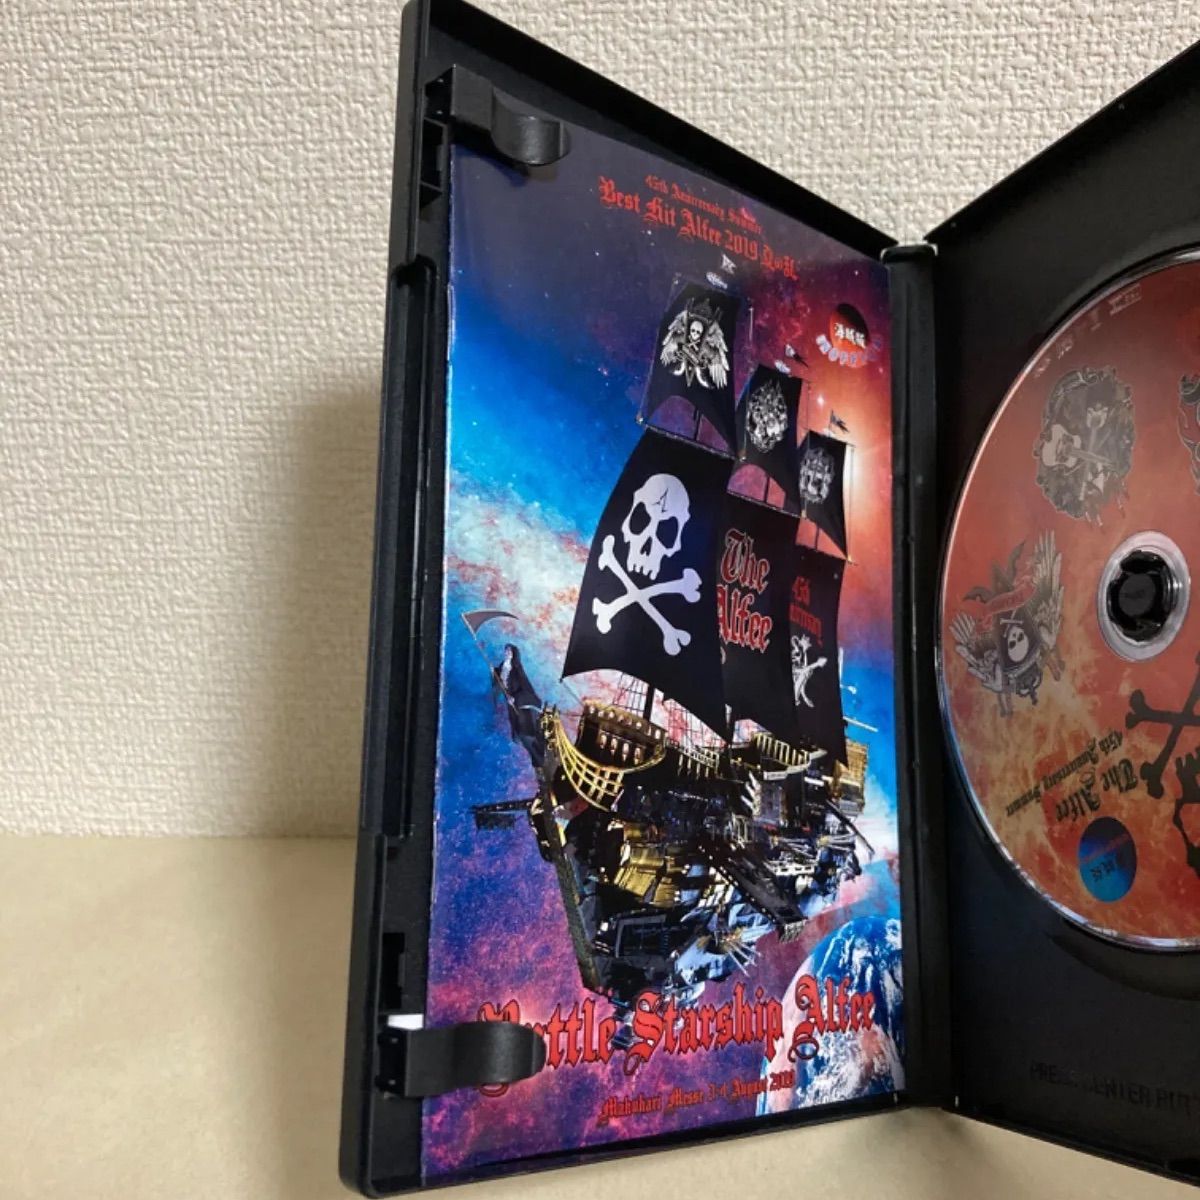 THE ALFEE 2019夏の乱 DVDパンフレット 公式、海賊版セット - 人 